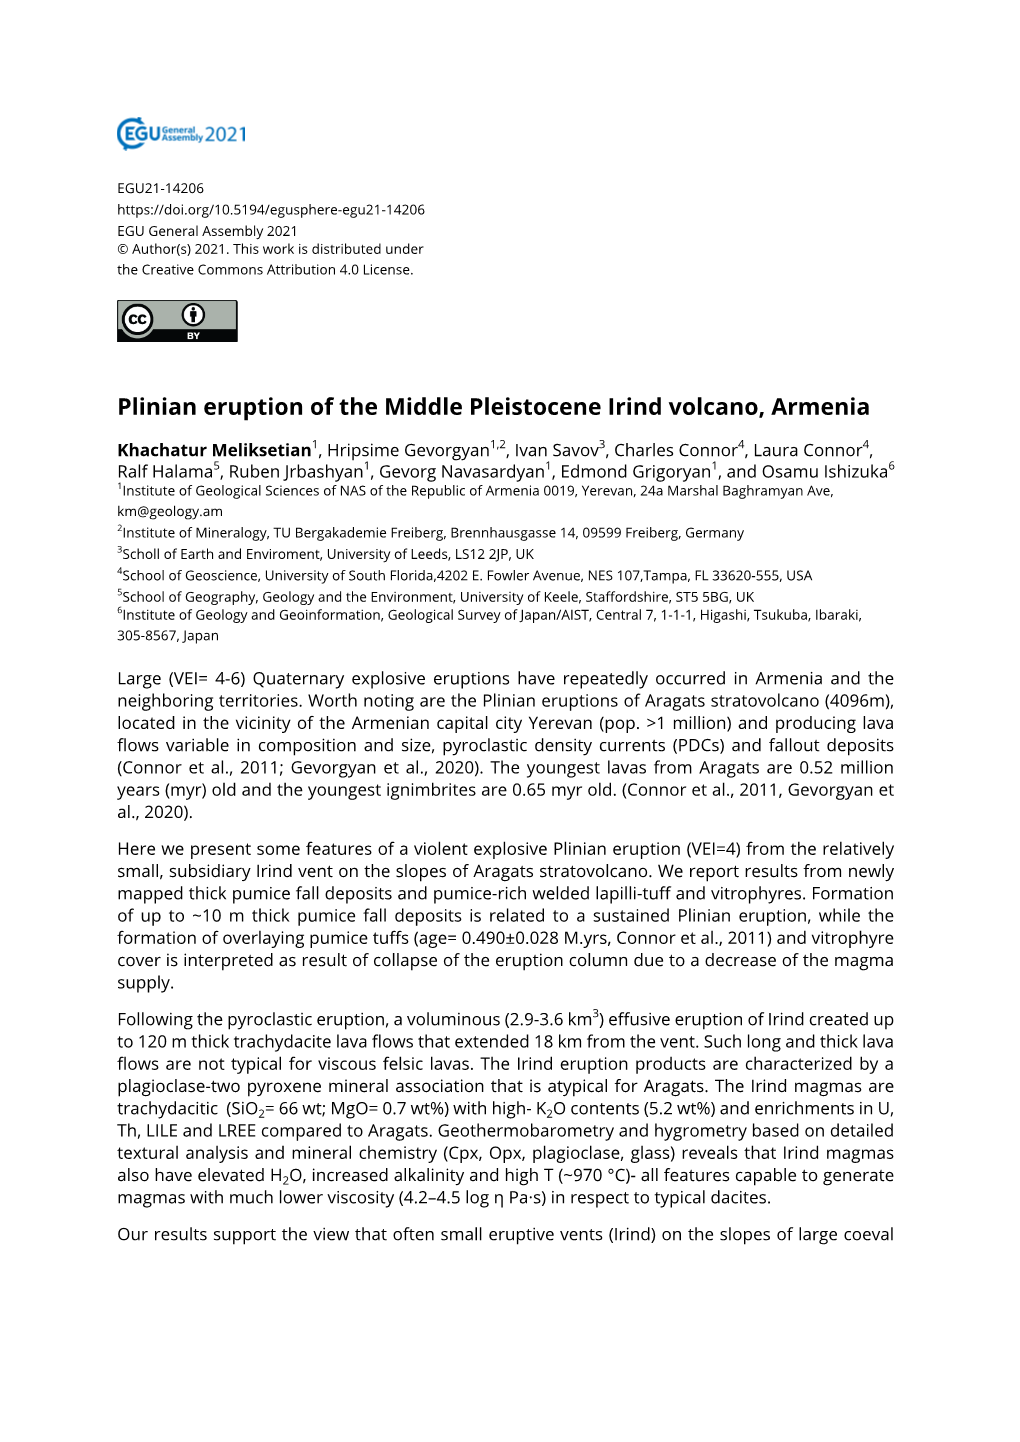 Plinian Eruption of the Middle Pleistocene Irind Volcano, Armenia